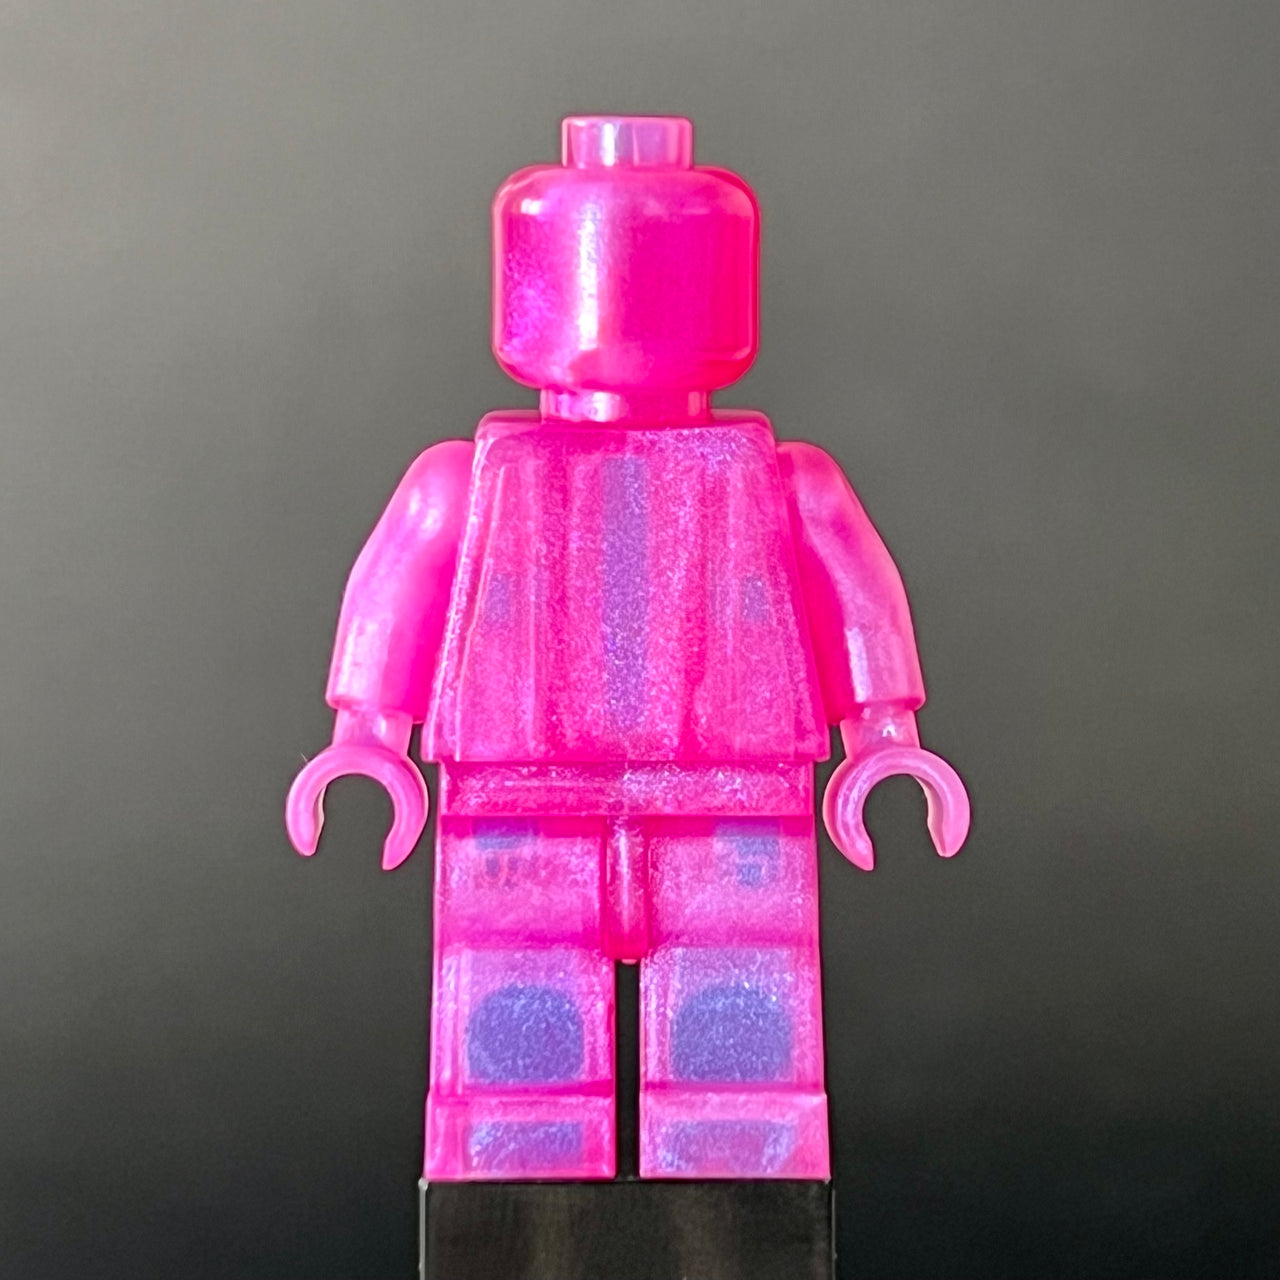 Satin-Dark Pink Monochrome Figure